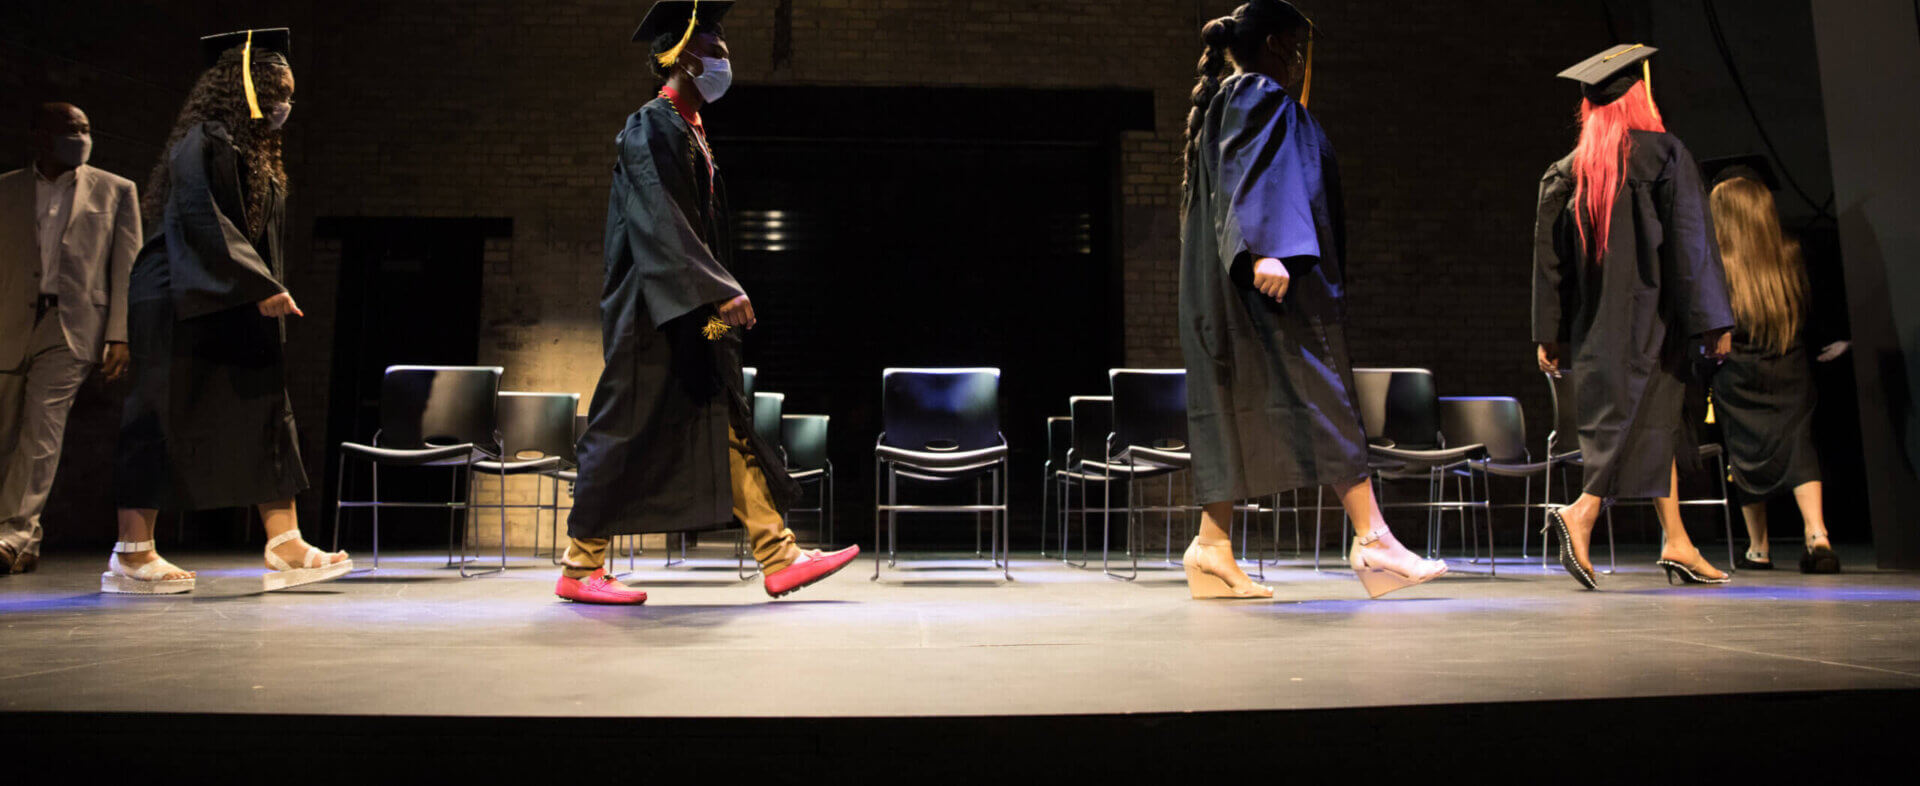 graduates walking across stage